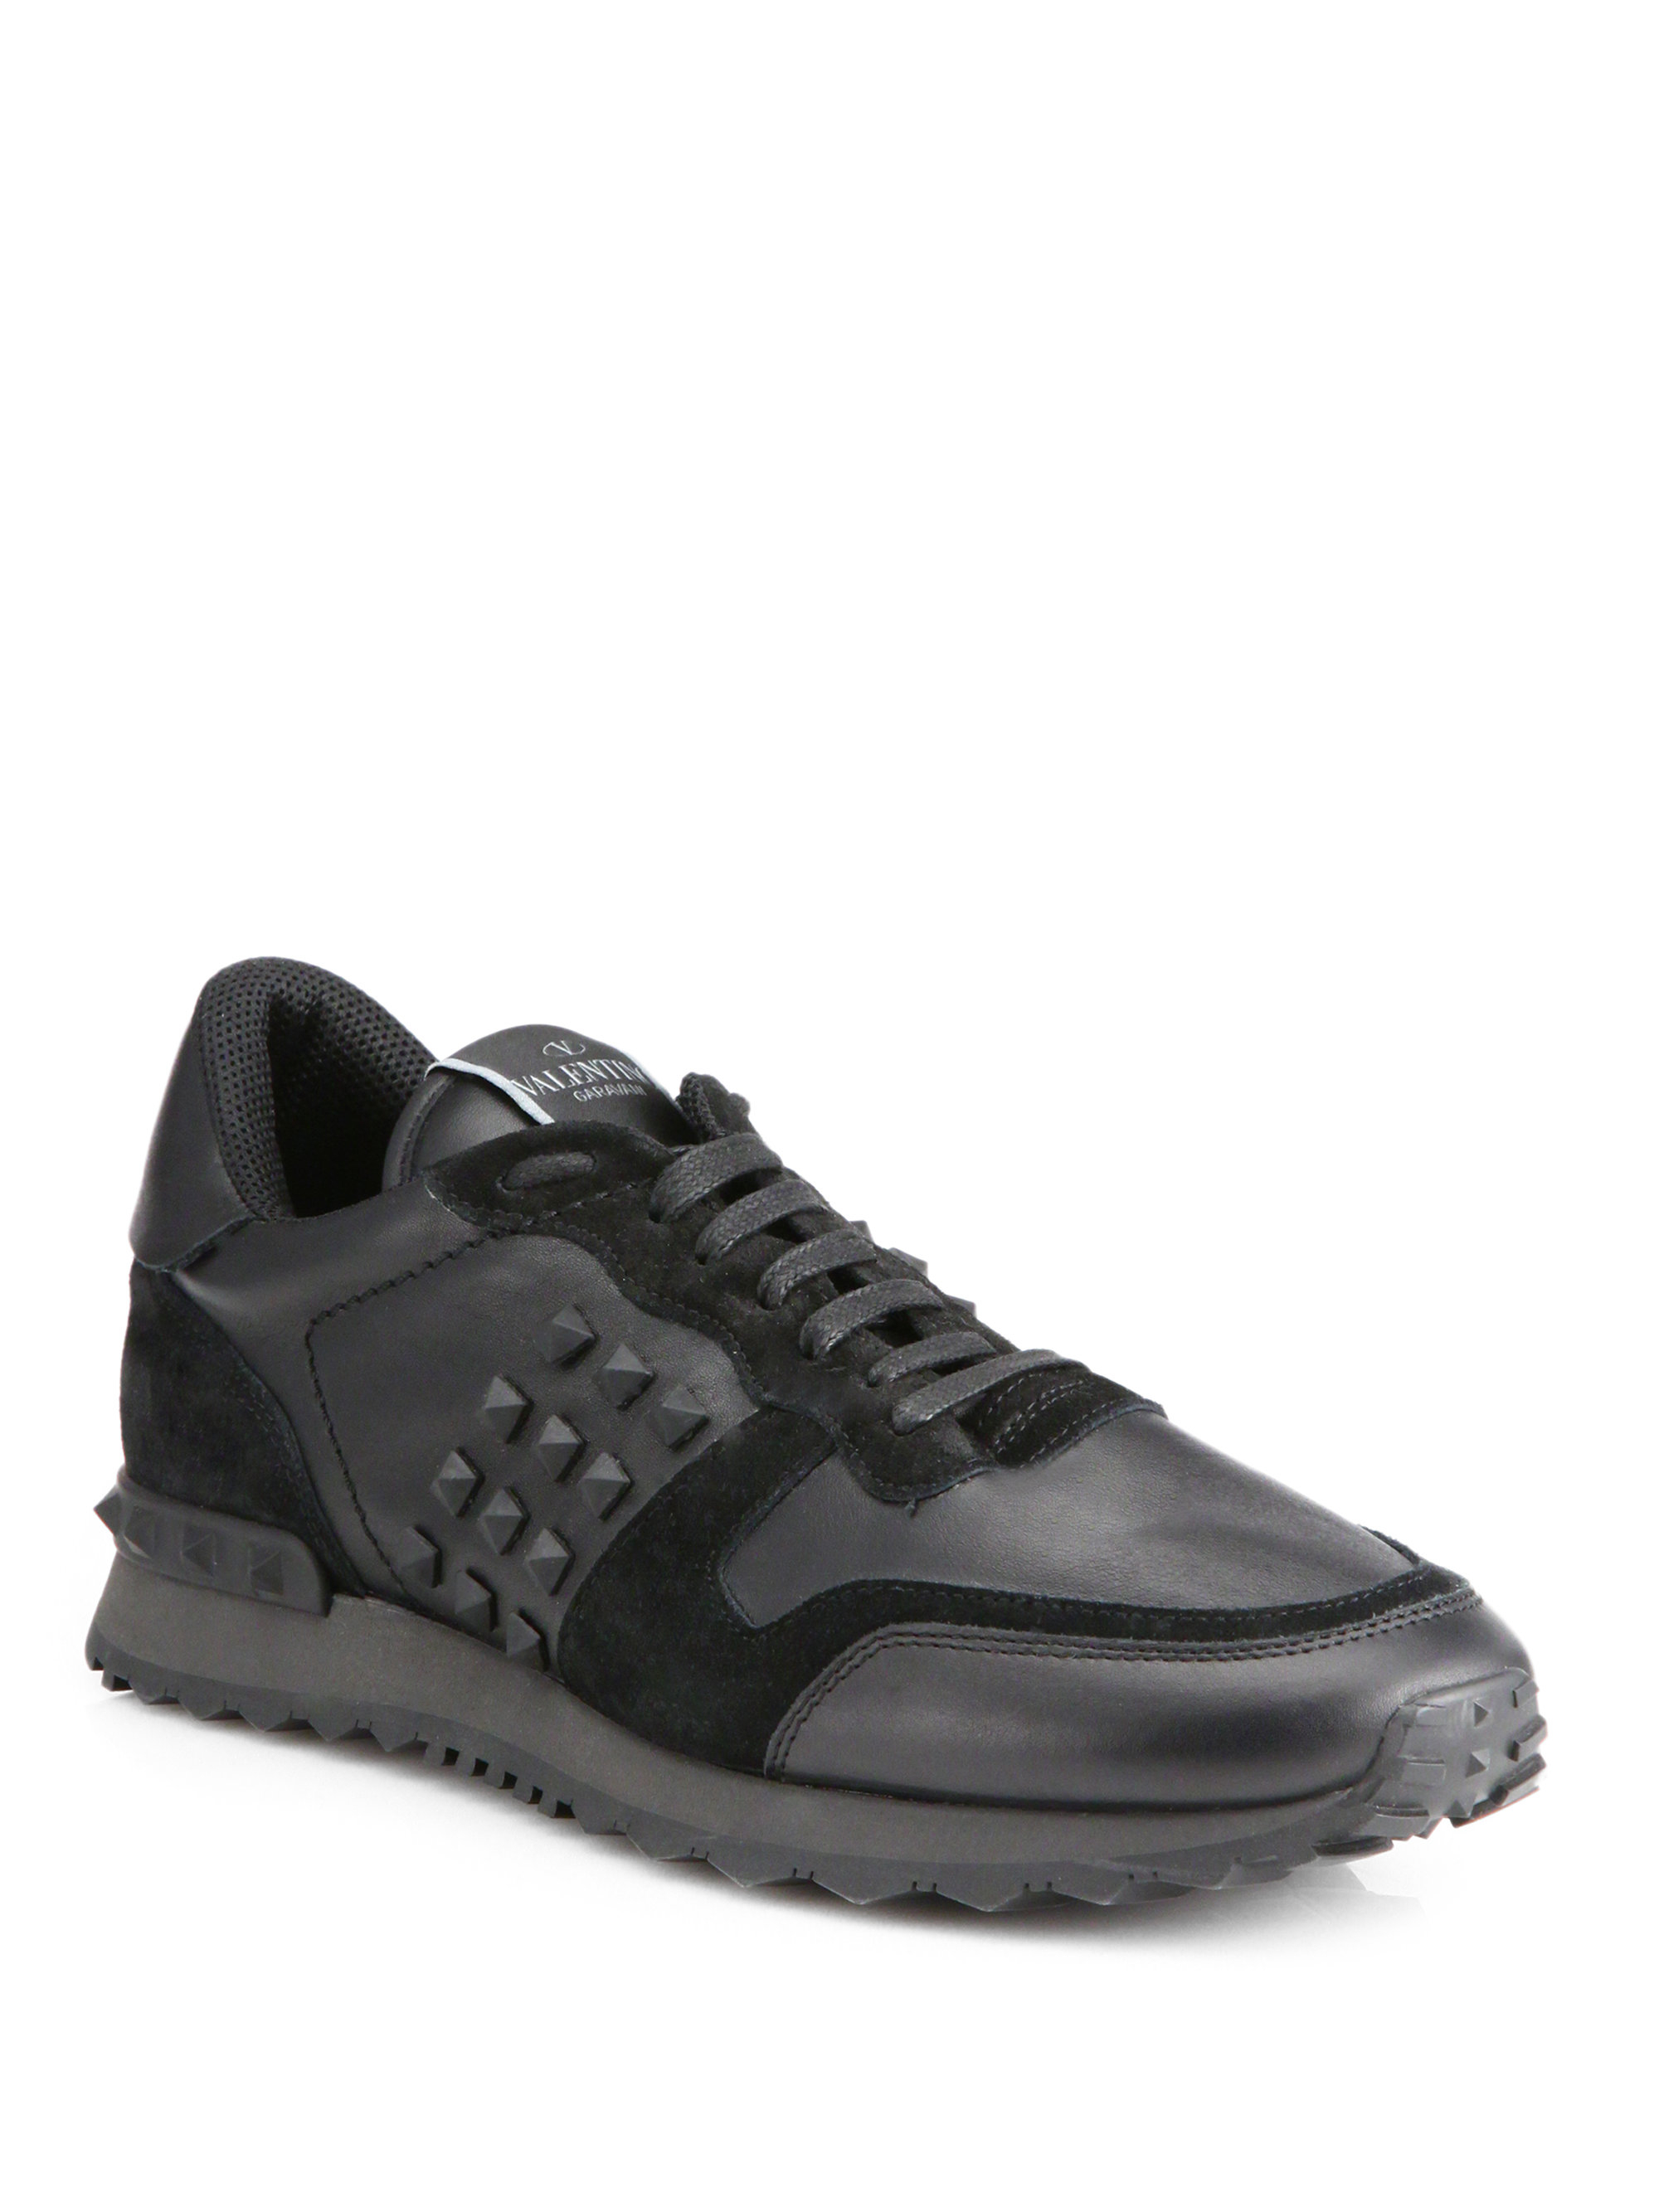 Lyst - Valentino Rockstud Sneakers in Black for Men